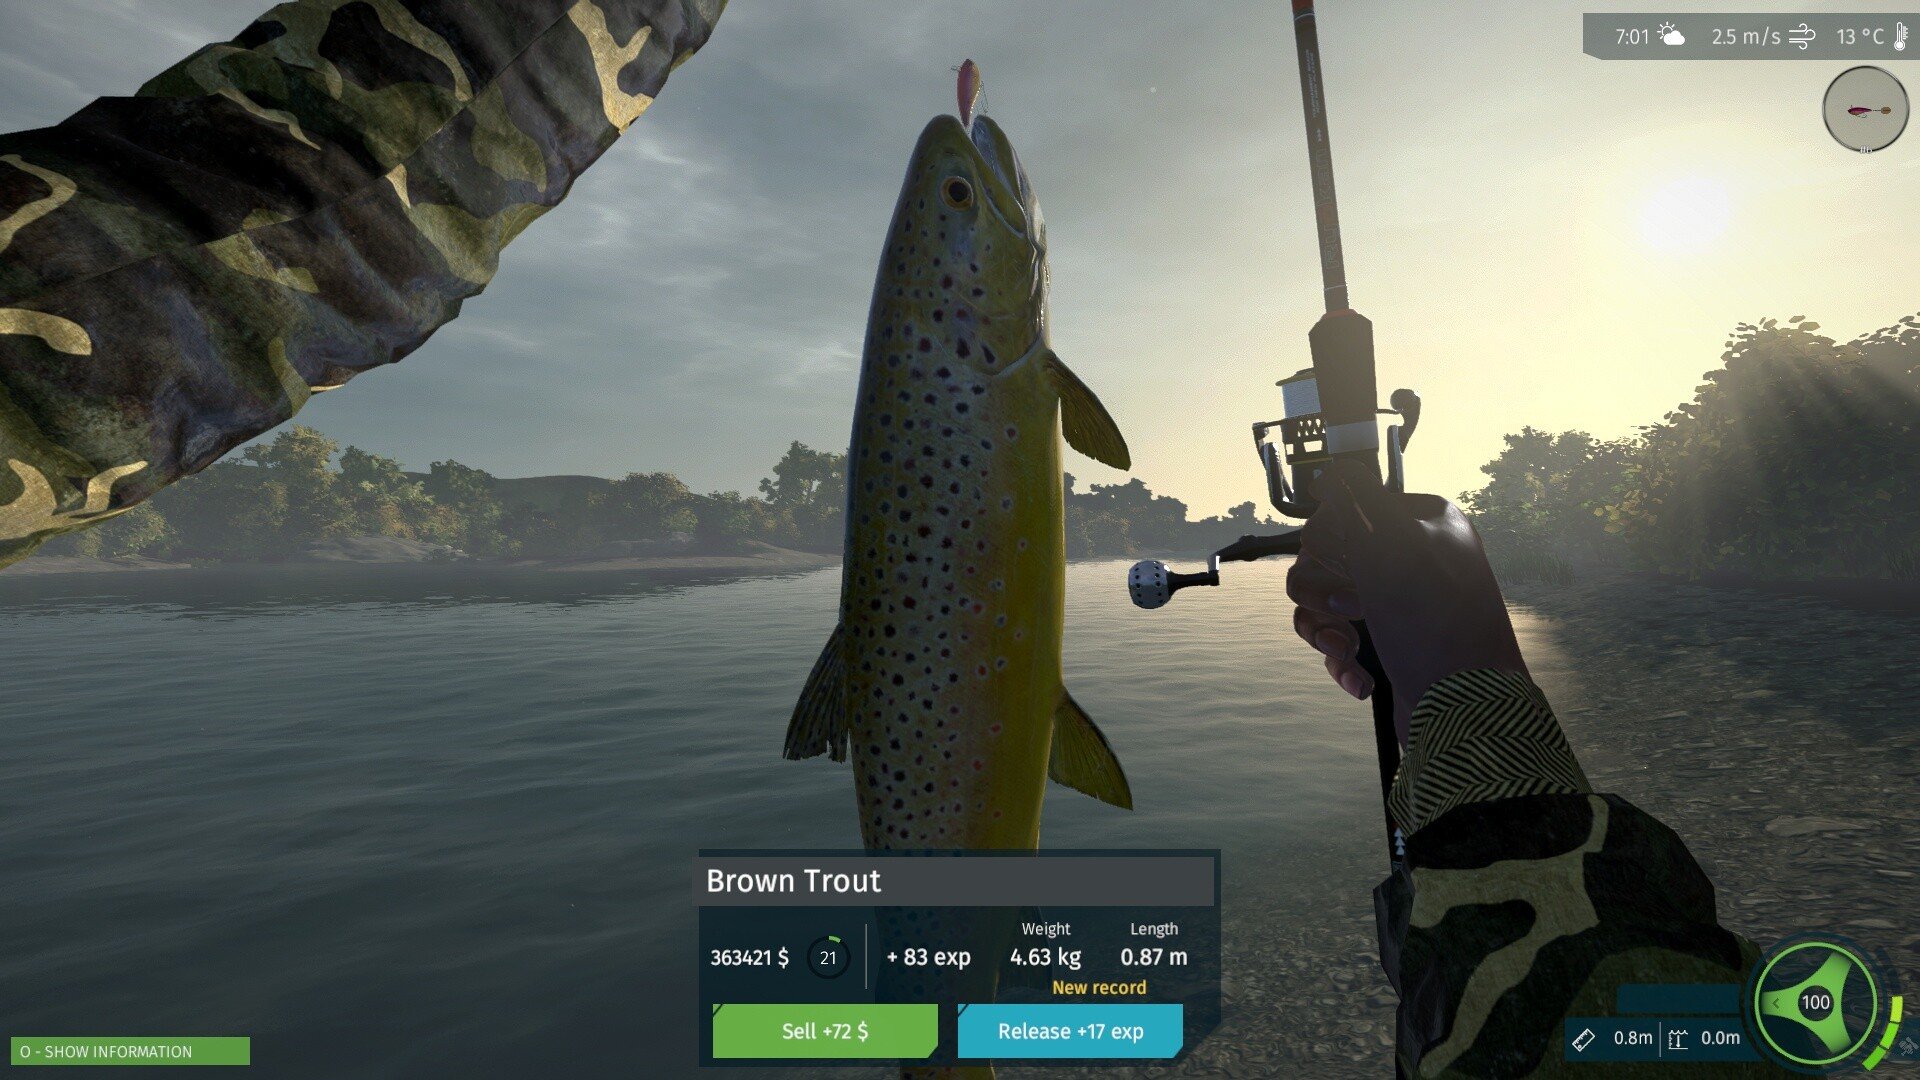 Obrázek ESD Ultimate Fishing Simulator Taupo Lake